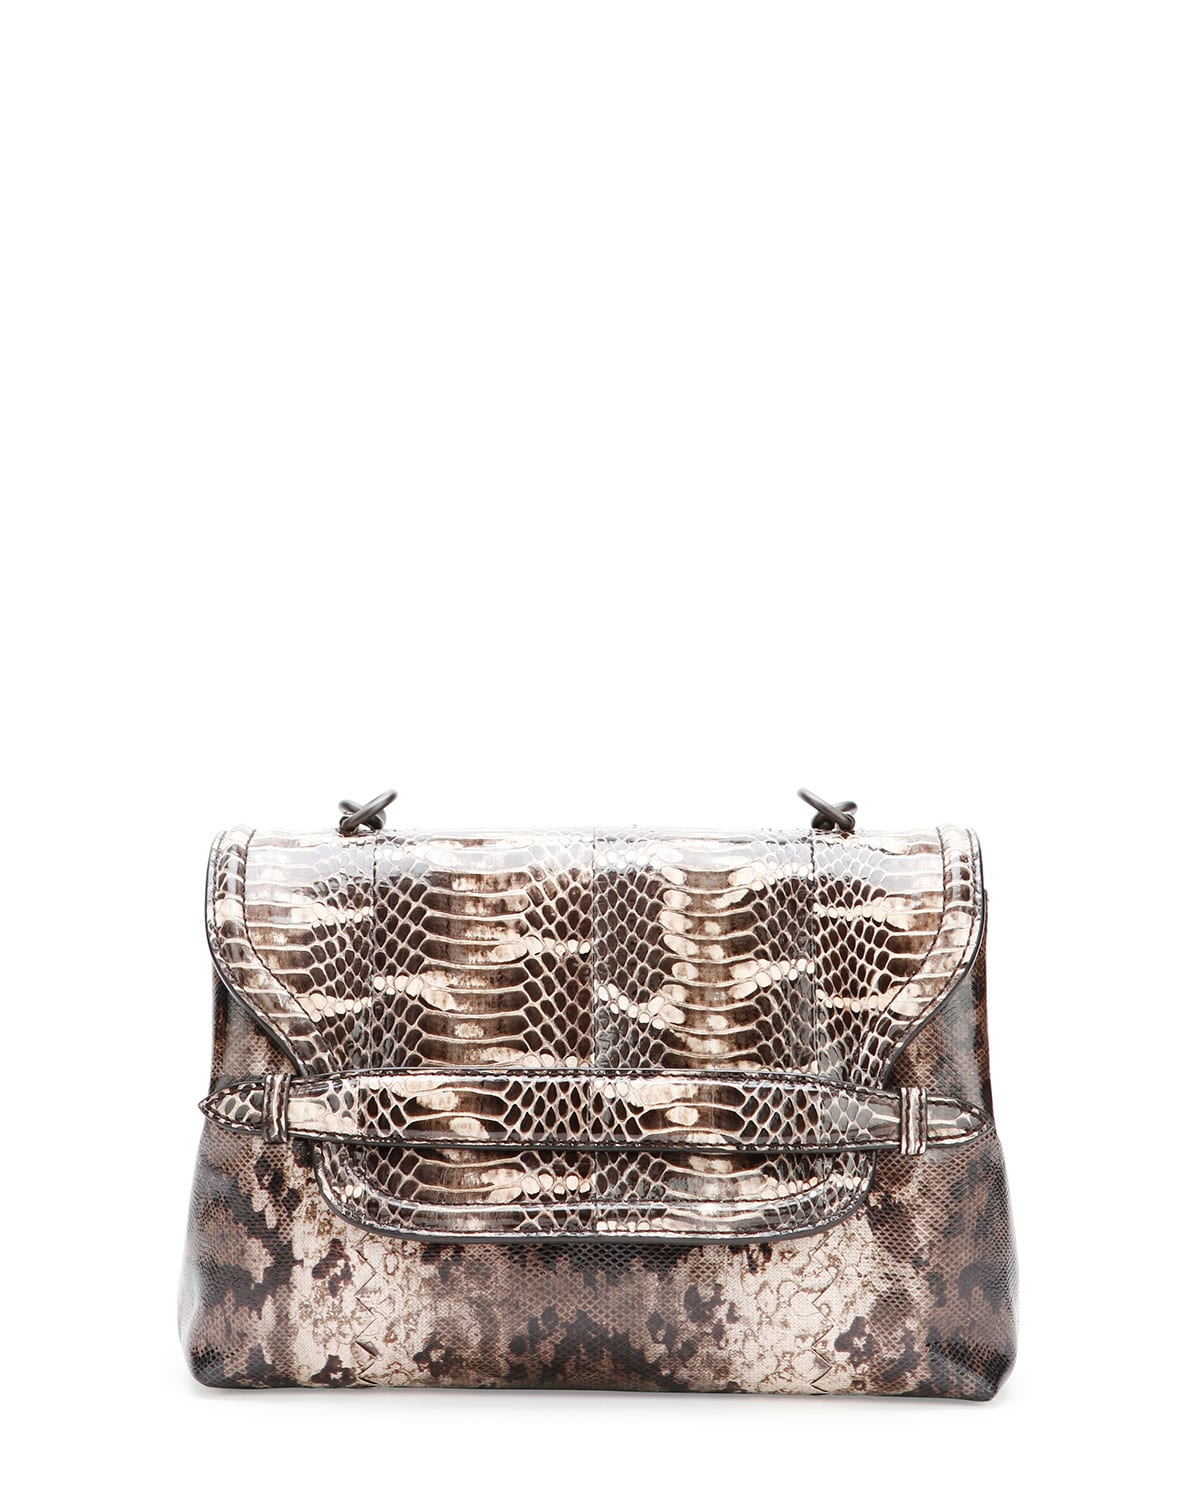 Bottega Veneta Fall/Winter 2014 Bag Collection | Spotted Fashion